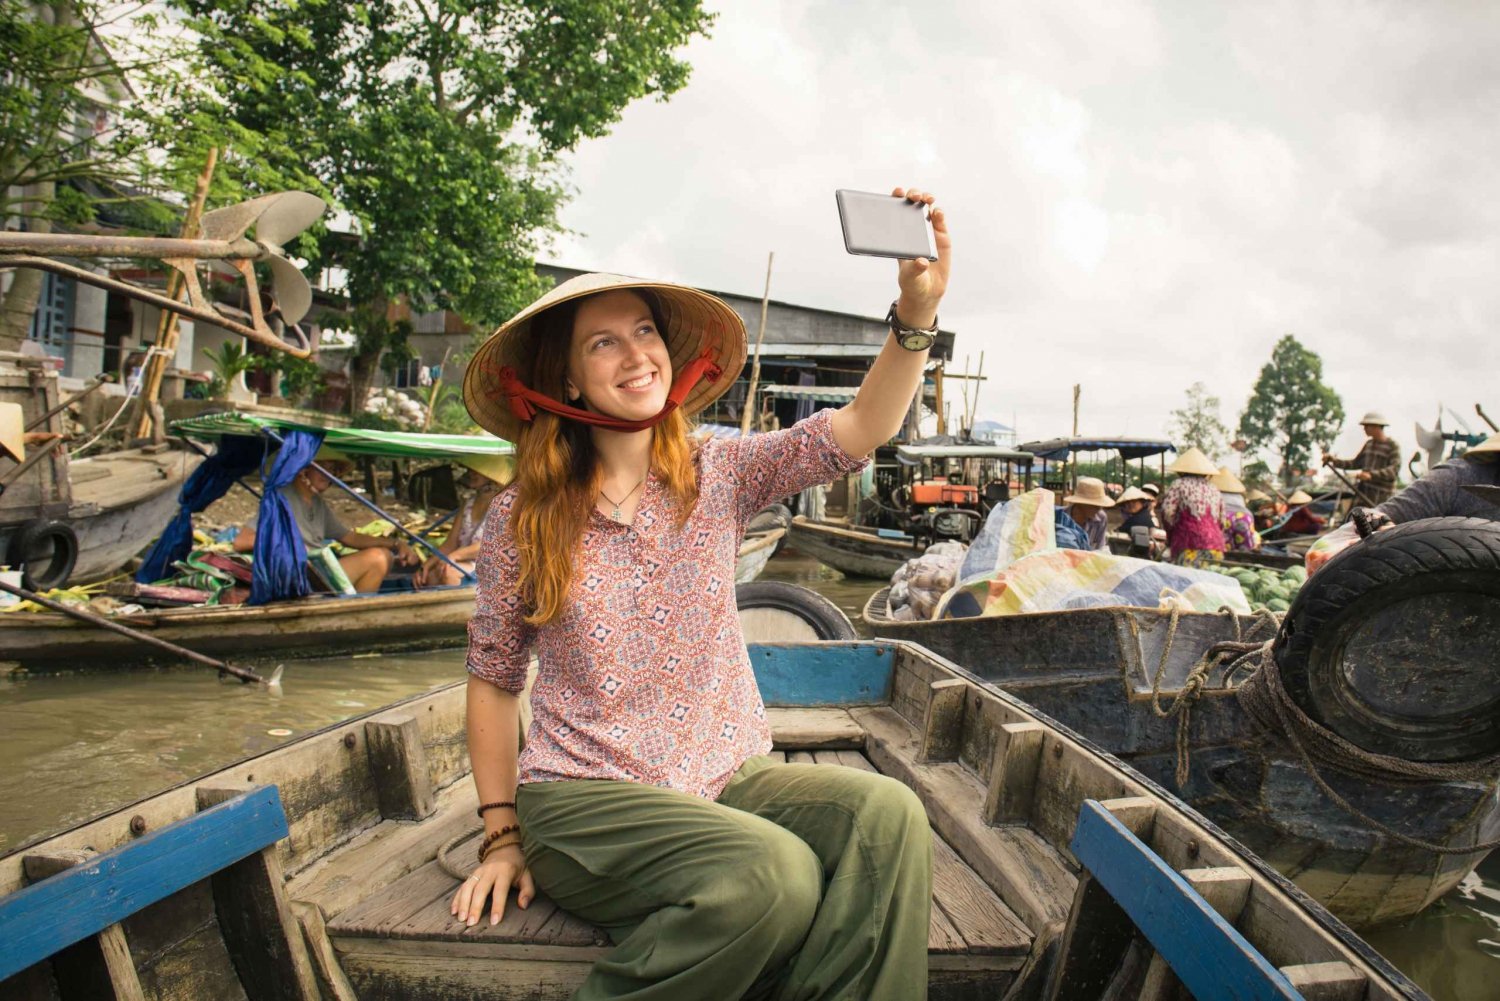 Unique Mekong Delta & Cai Rang Floating Market 2-Day Tour